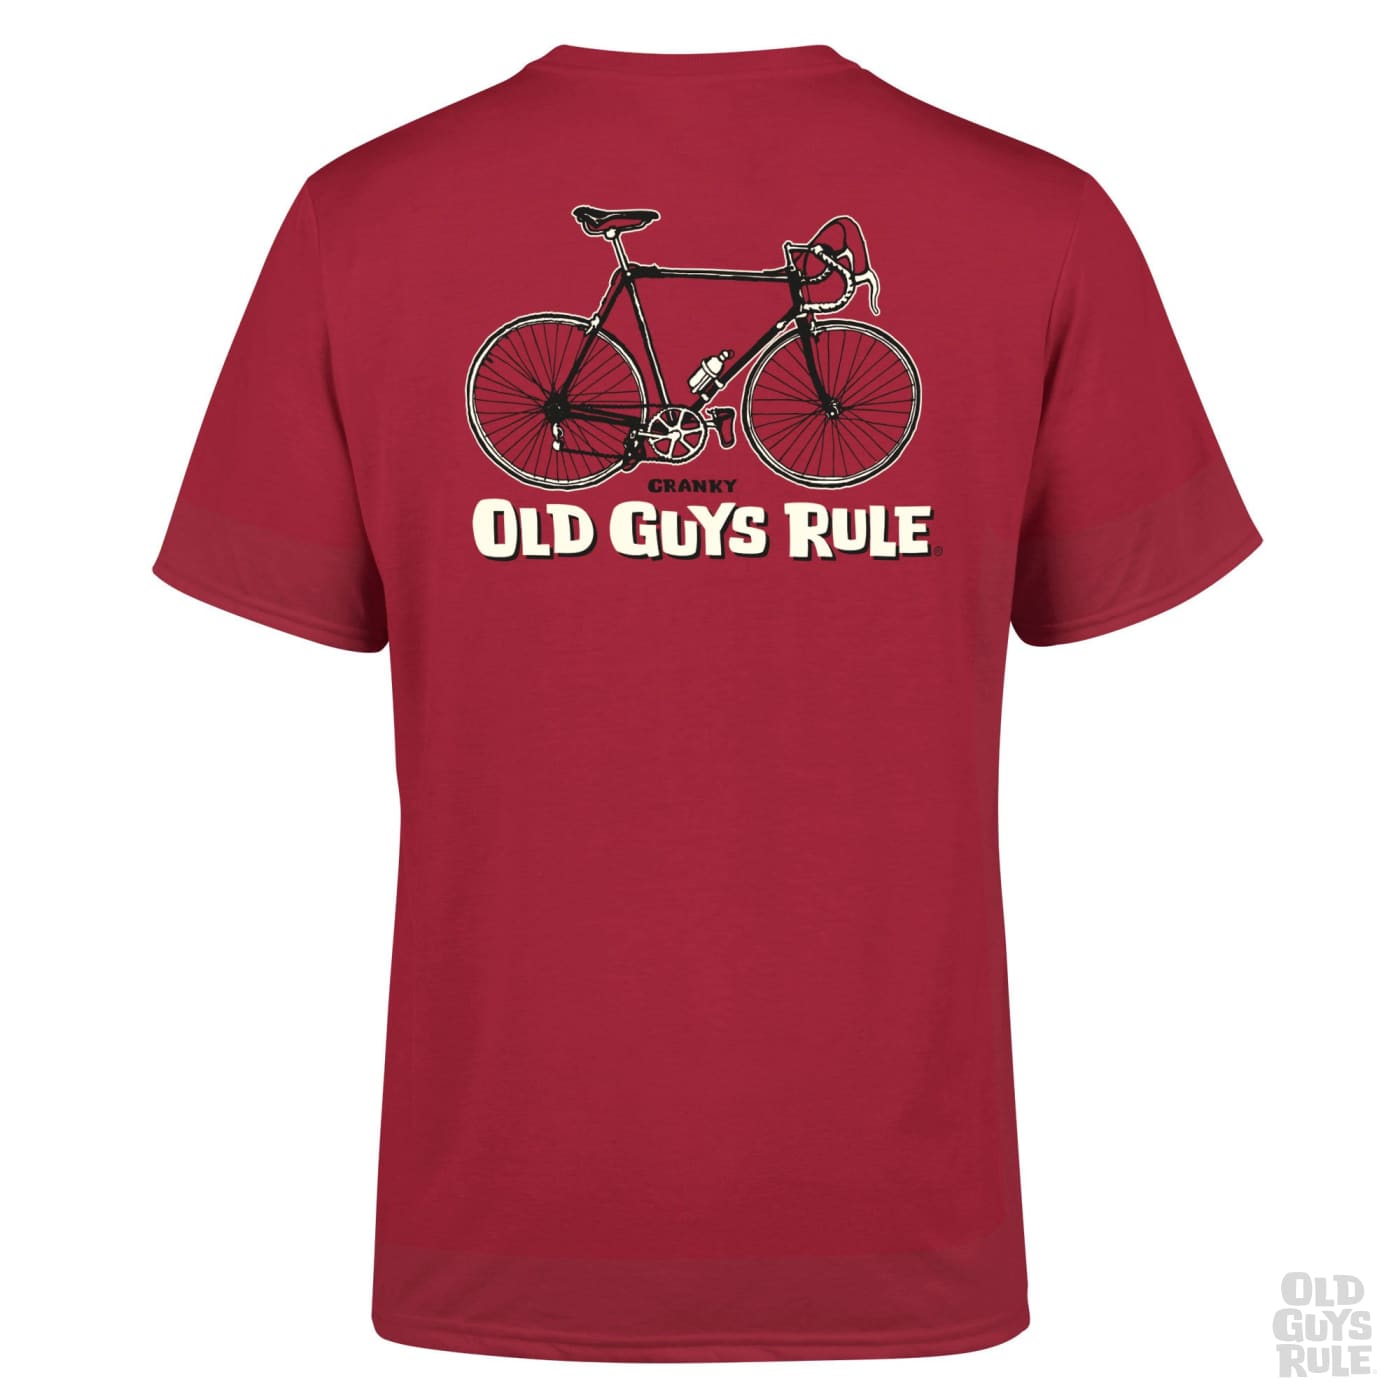 Old Guys Rule Cranky T-Shirt - Cardinal Red